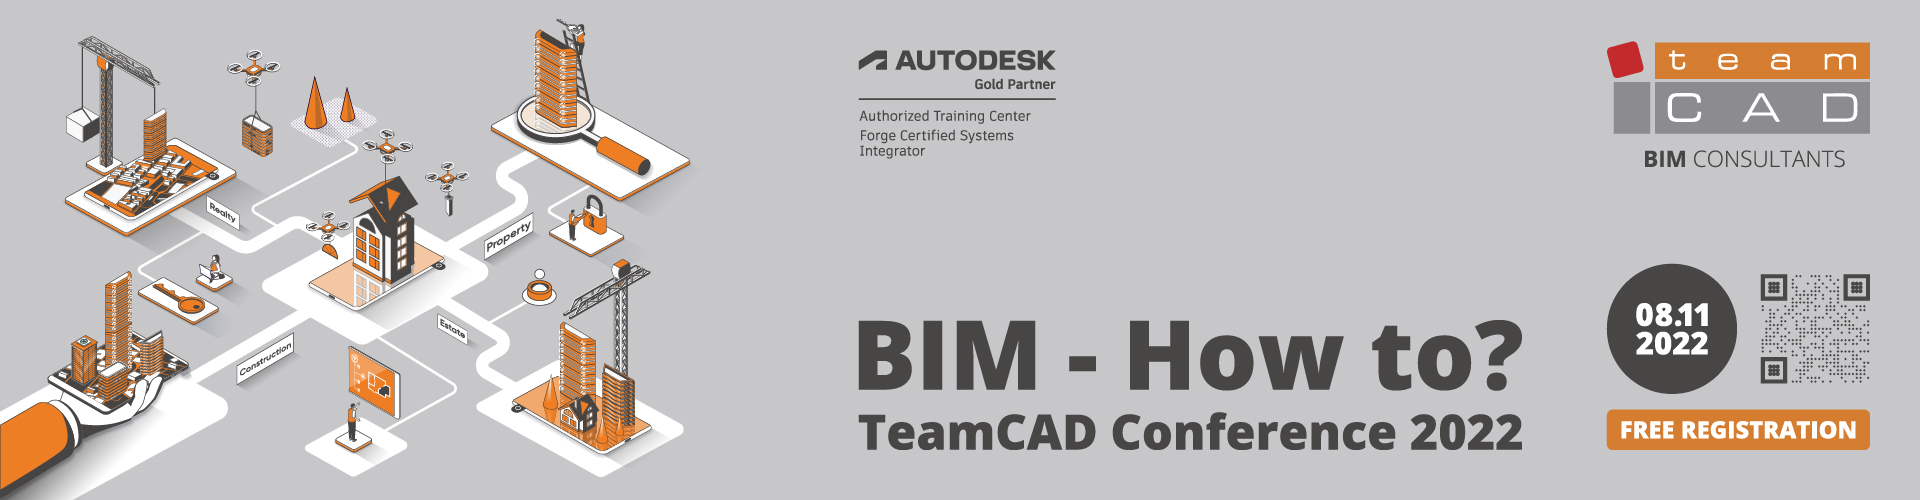 BIM - How to? TeamCAD BIM Conference 2022